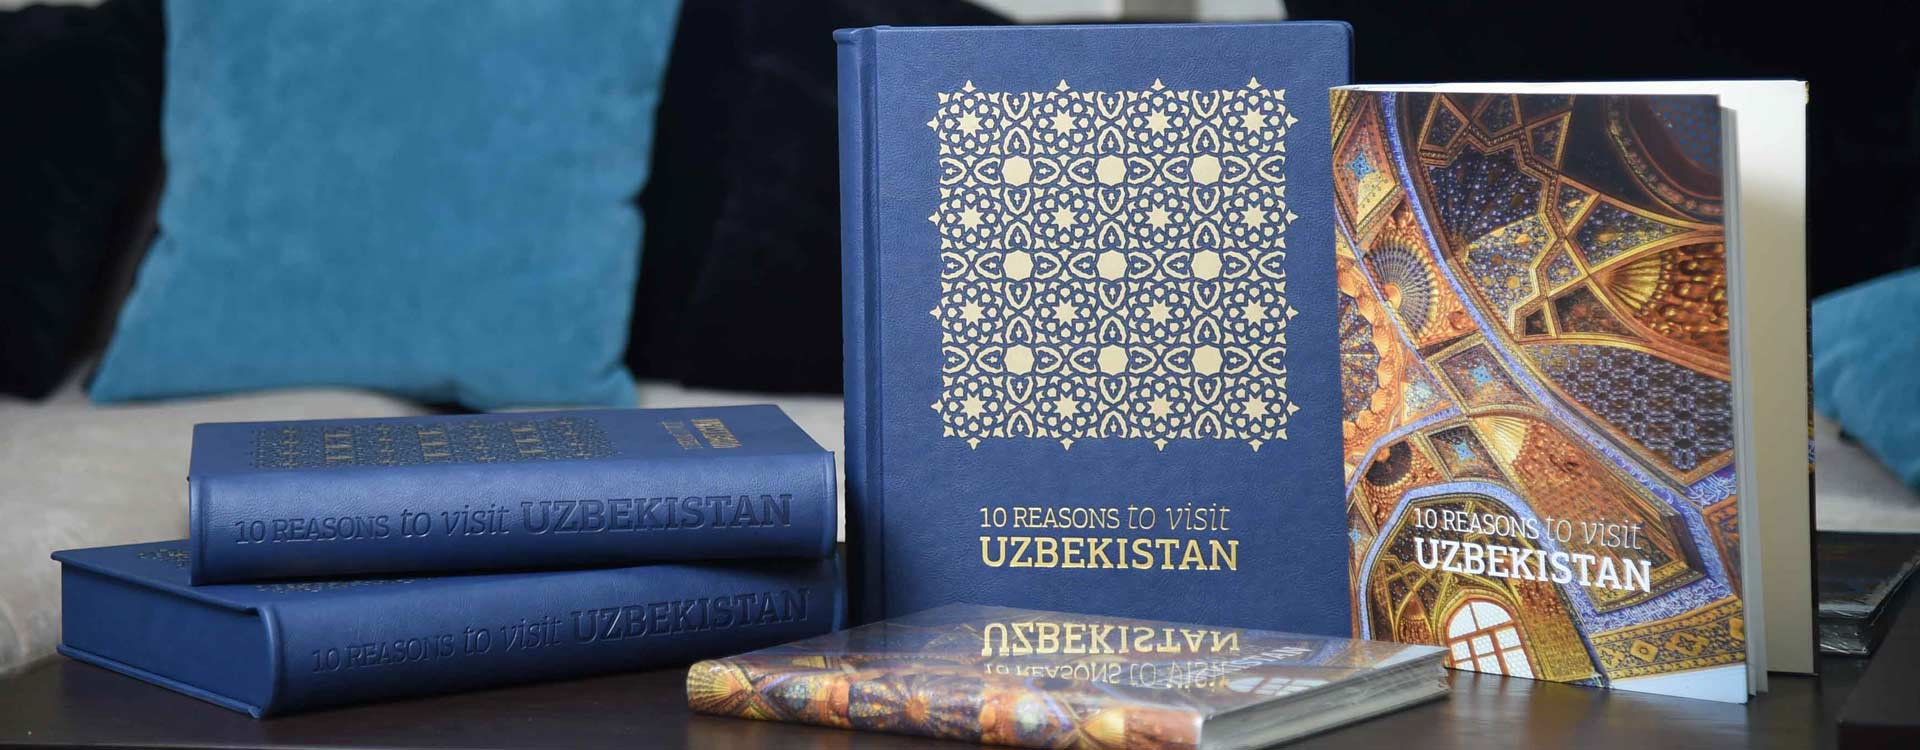 Uzbekistan Travel Books